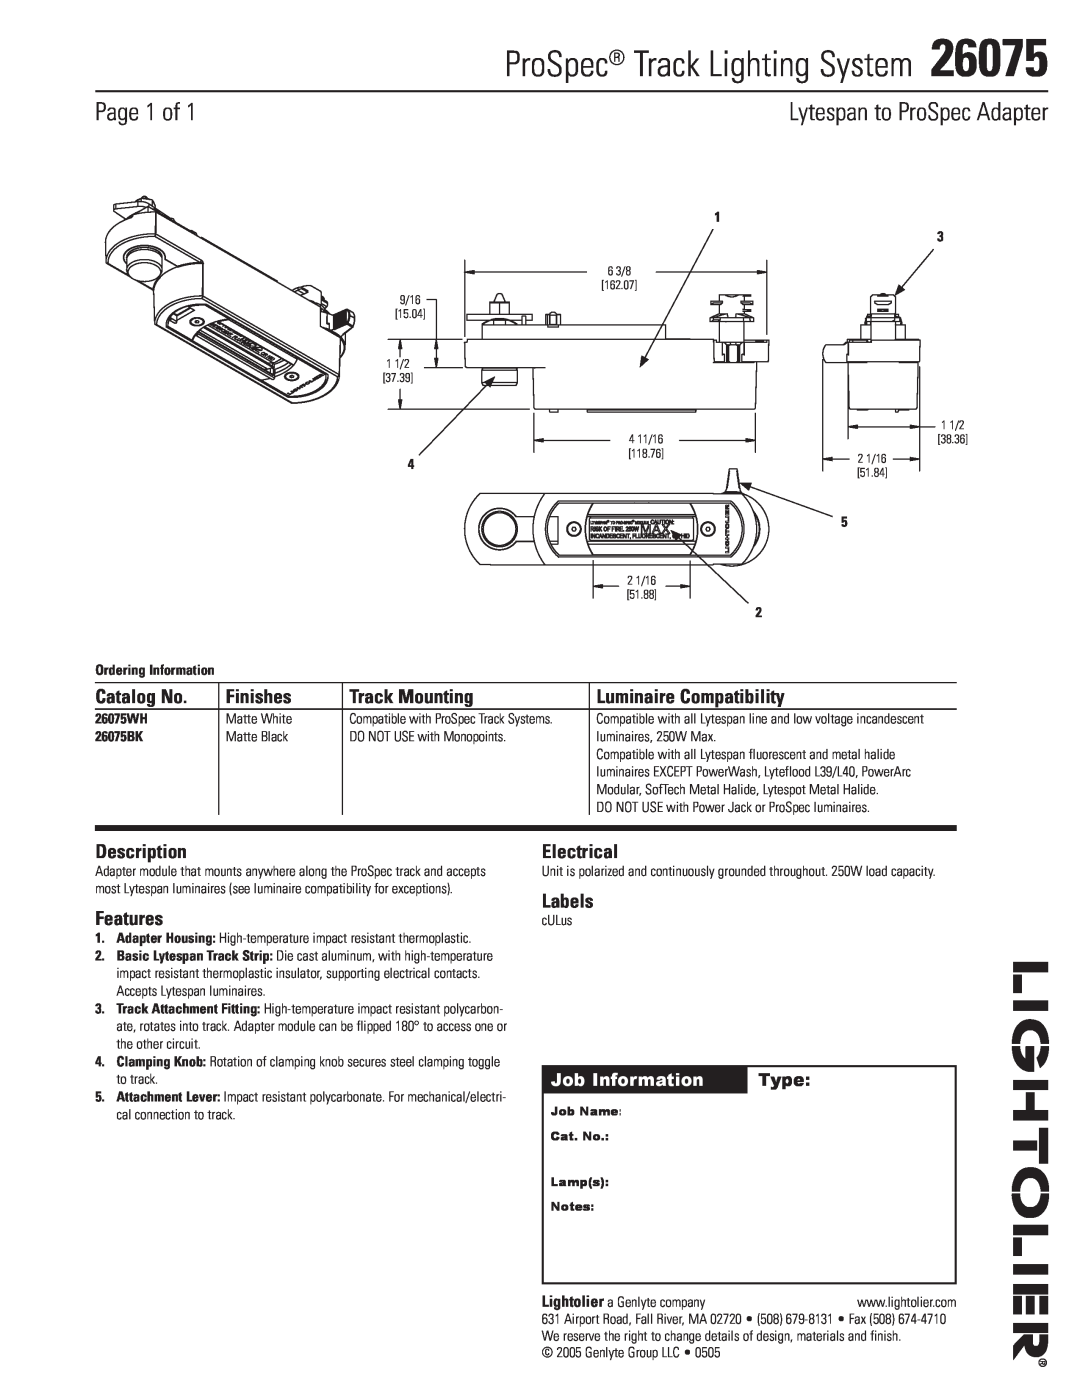 Lightolier 26075 manual ProSpec Track Lighting System, Page 1 of, Lytespan to ProSpec Adapter, Catalog No, Finishes, Type 